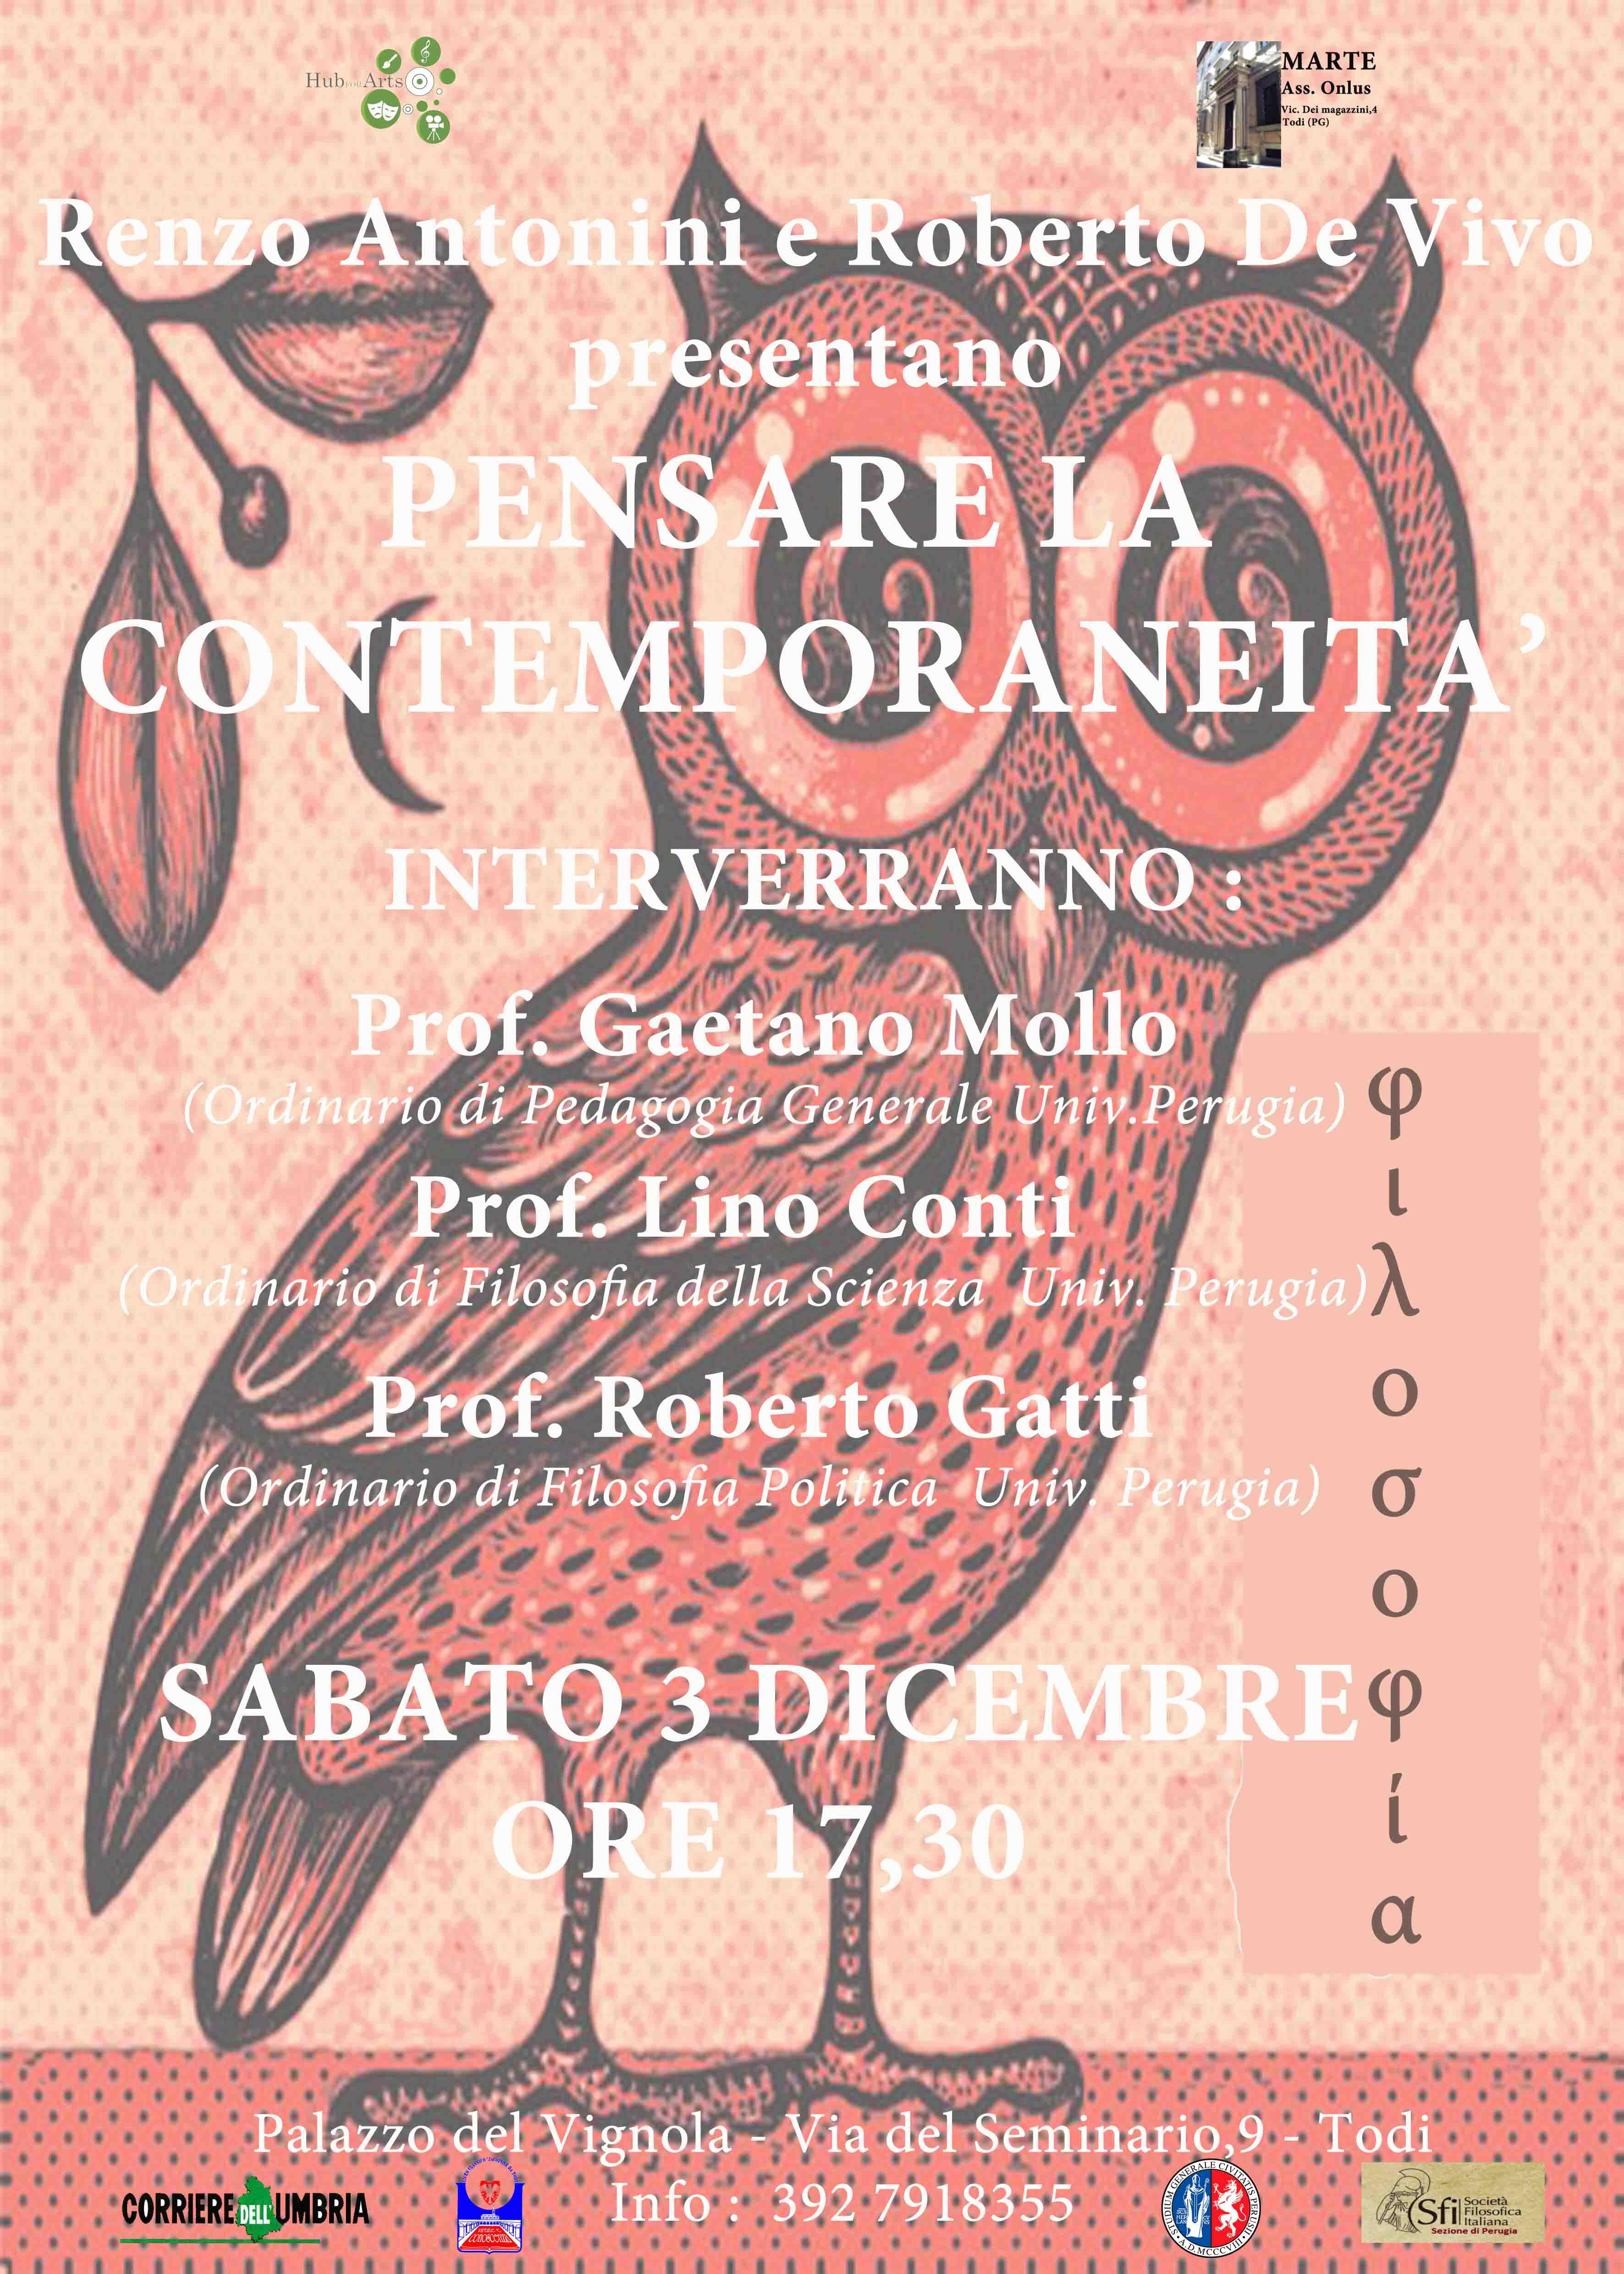 LOCANDINA SU PENSARE LA CONTEMPORANEITA 03.12.2016